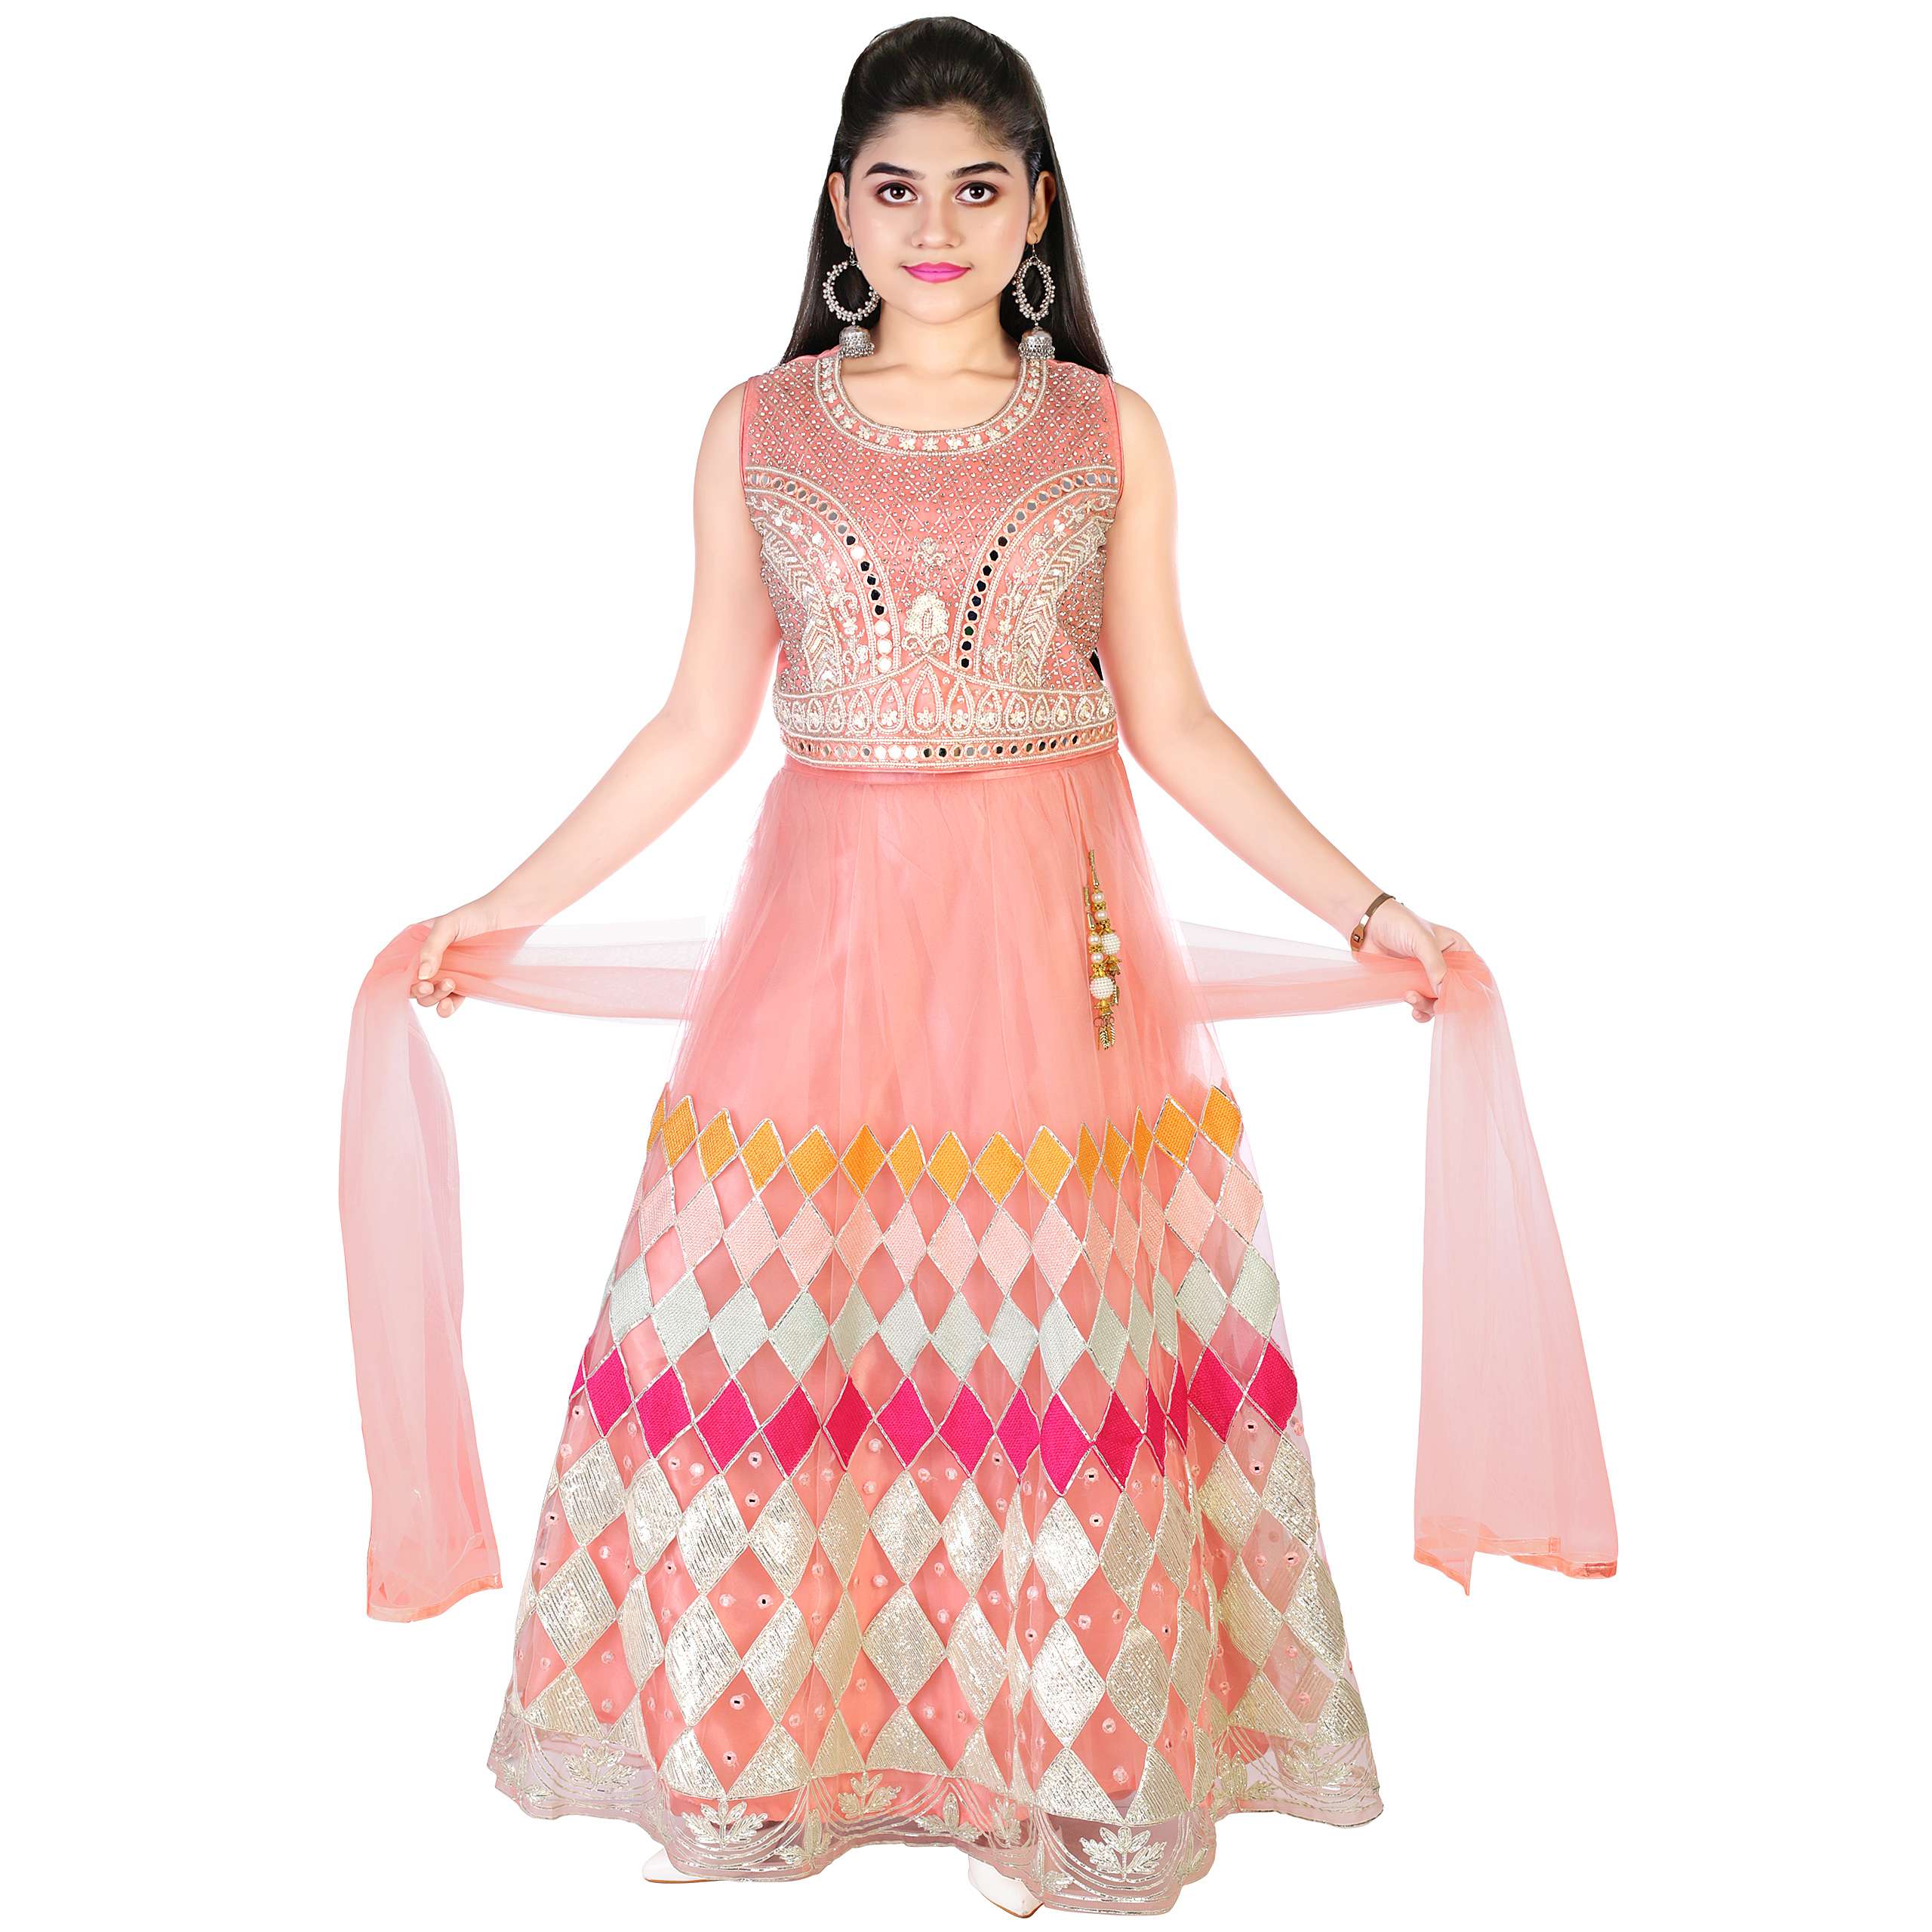 Balaji Emporium Presents Kids Wear Special Designer Indian Party Wear Net Anarkali Salwar Kameez Suit Girlish Dress Collection At Best Price 3026